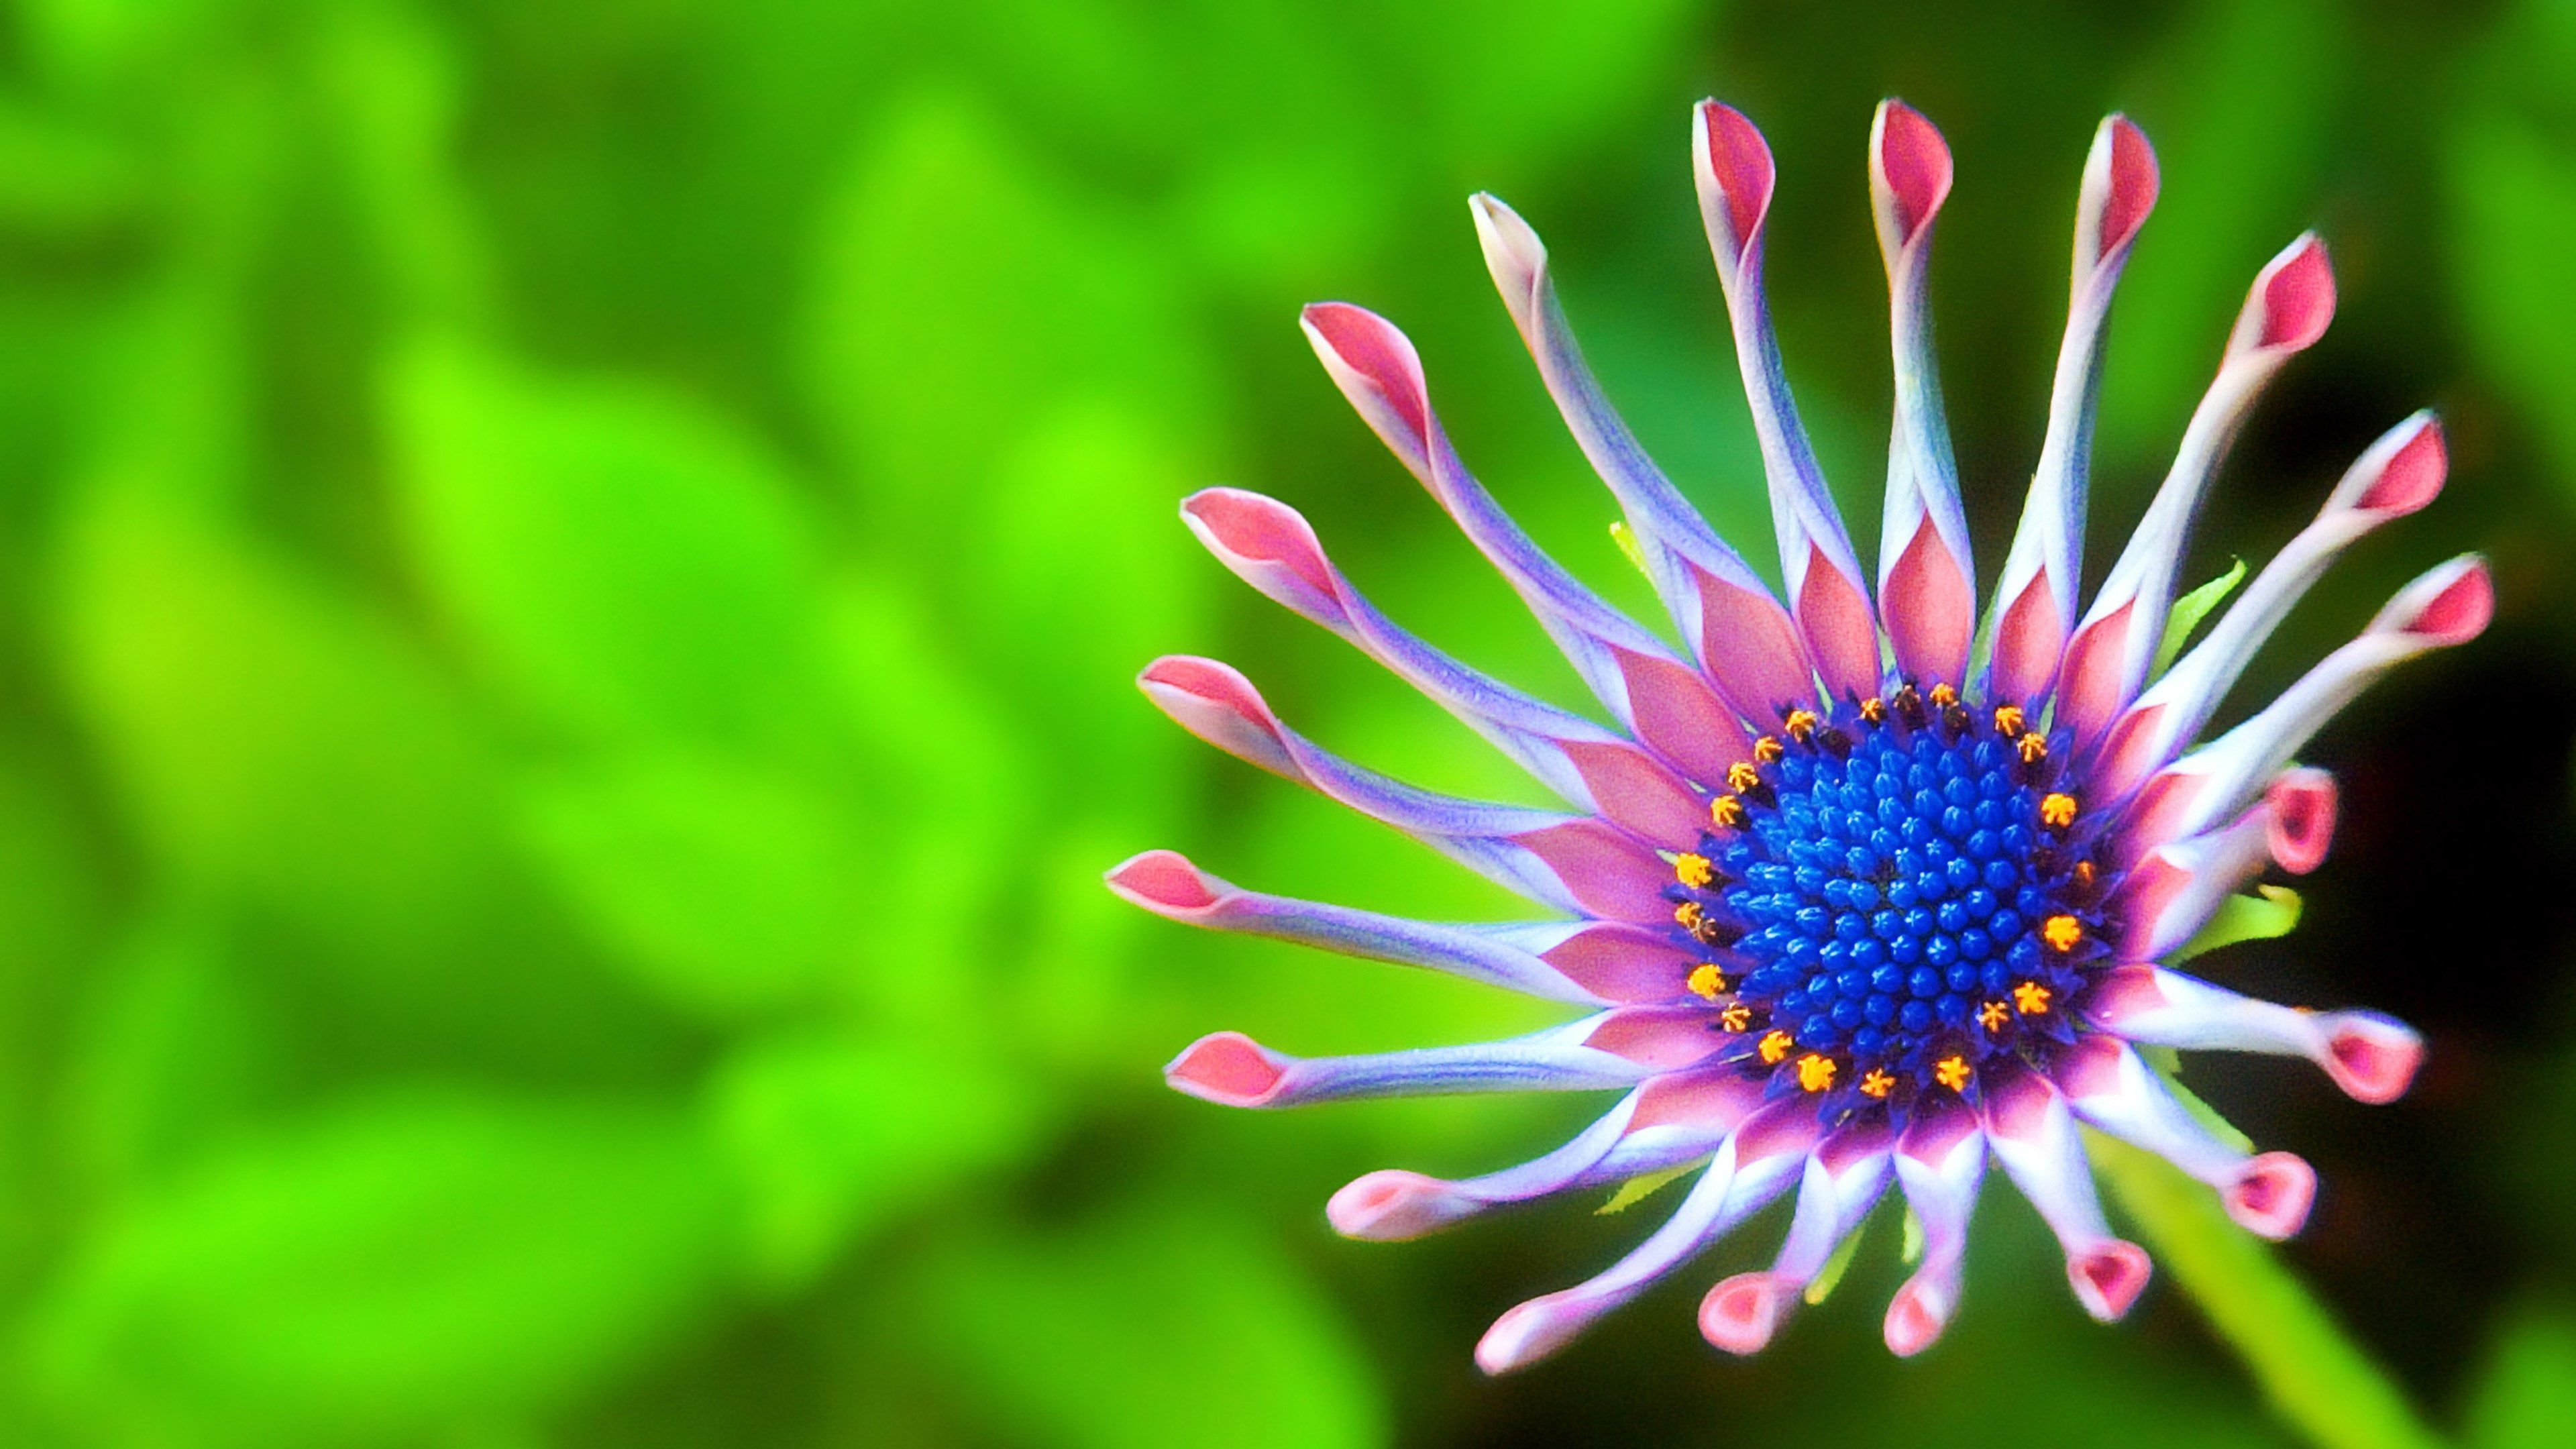 beautiful flower 4k HD image. Best flower wallpaper, Flower image wallpaper, Macro photography nature